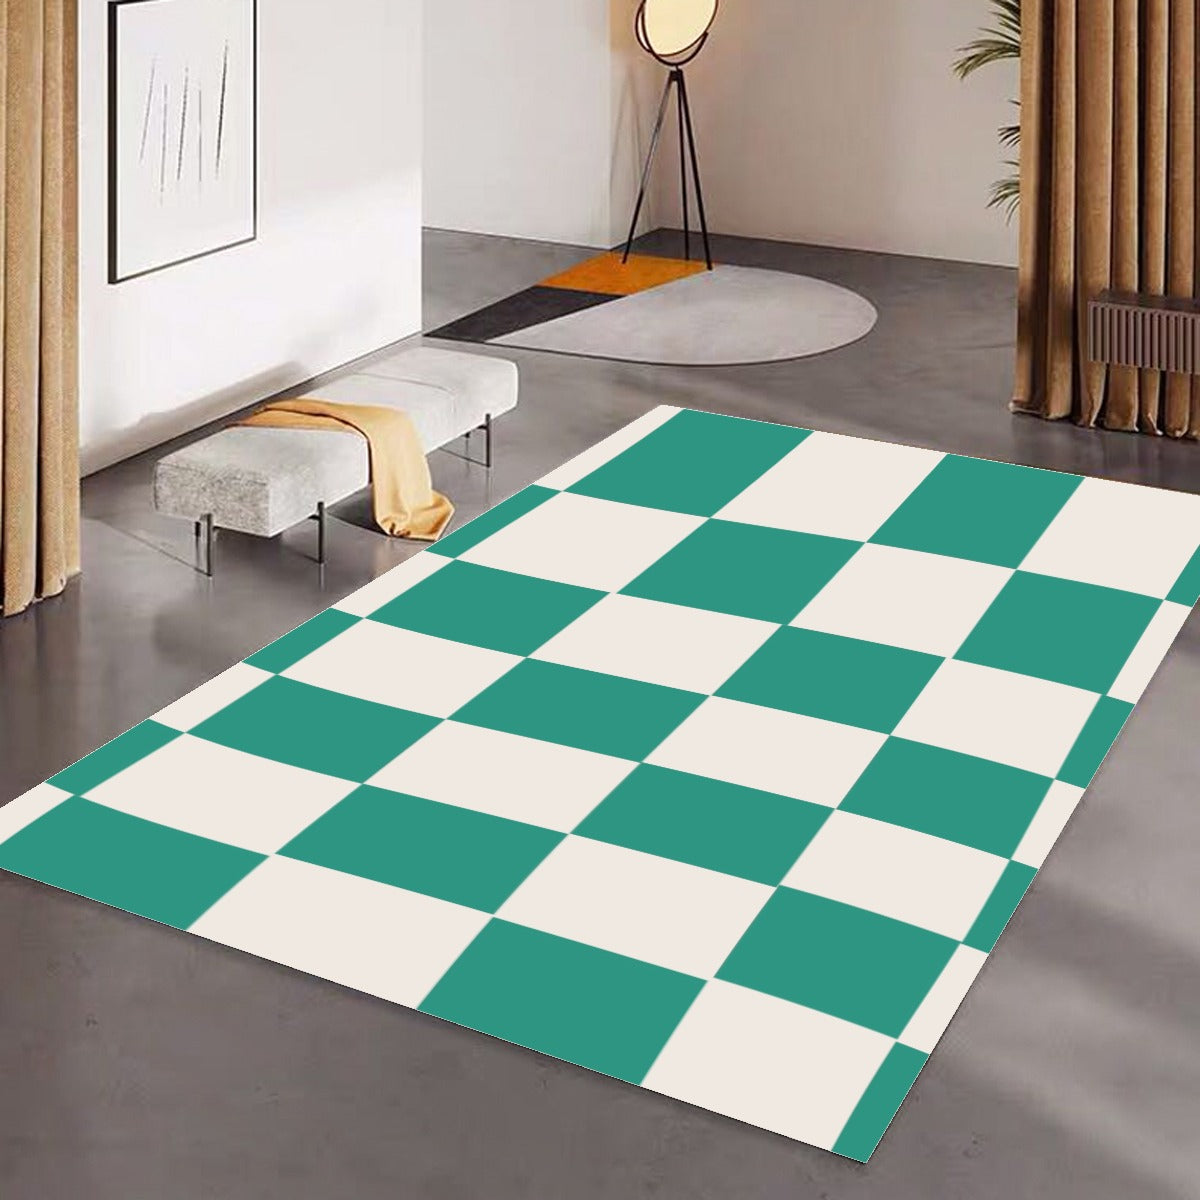 Turquoise Checkered Foldable Rectangular Floor Mat